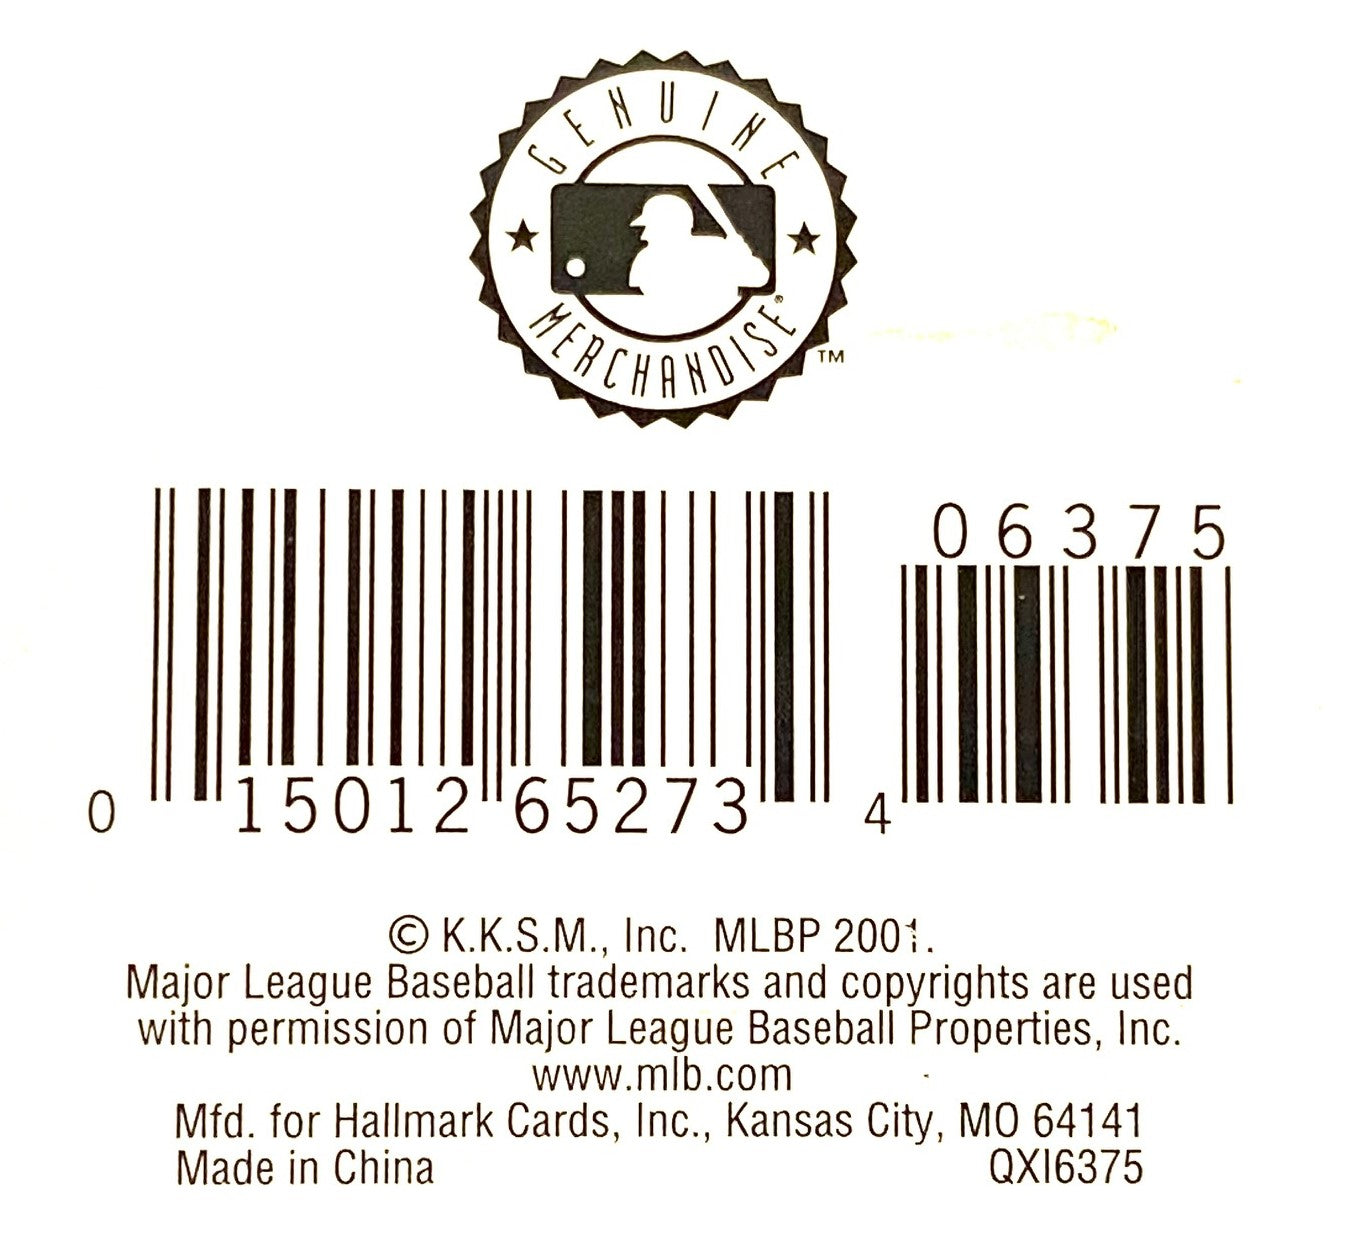 Sammy Sosa 2001 MLB Chicago Cubs Keepsake Ornament Used by Hallmark